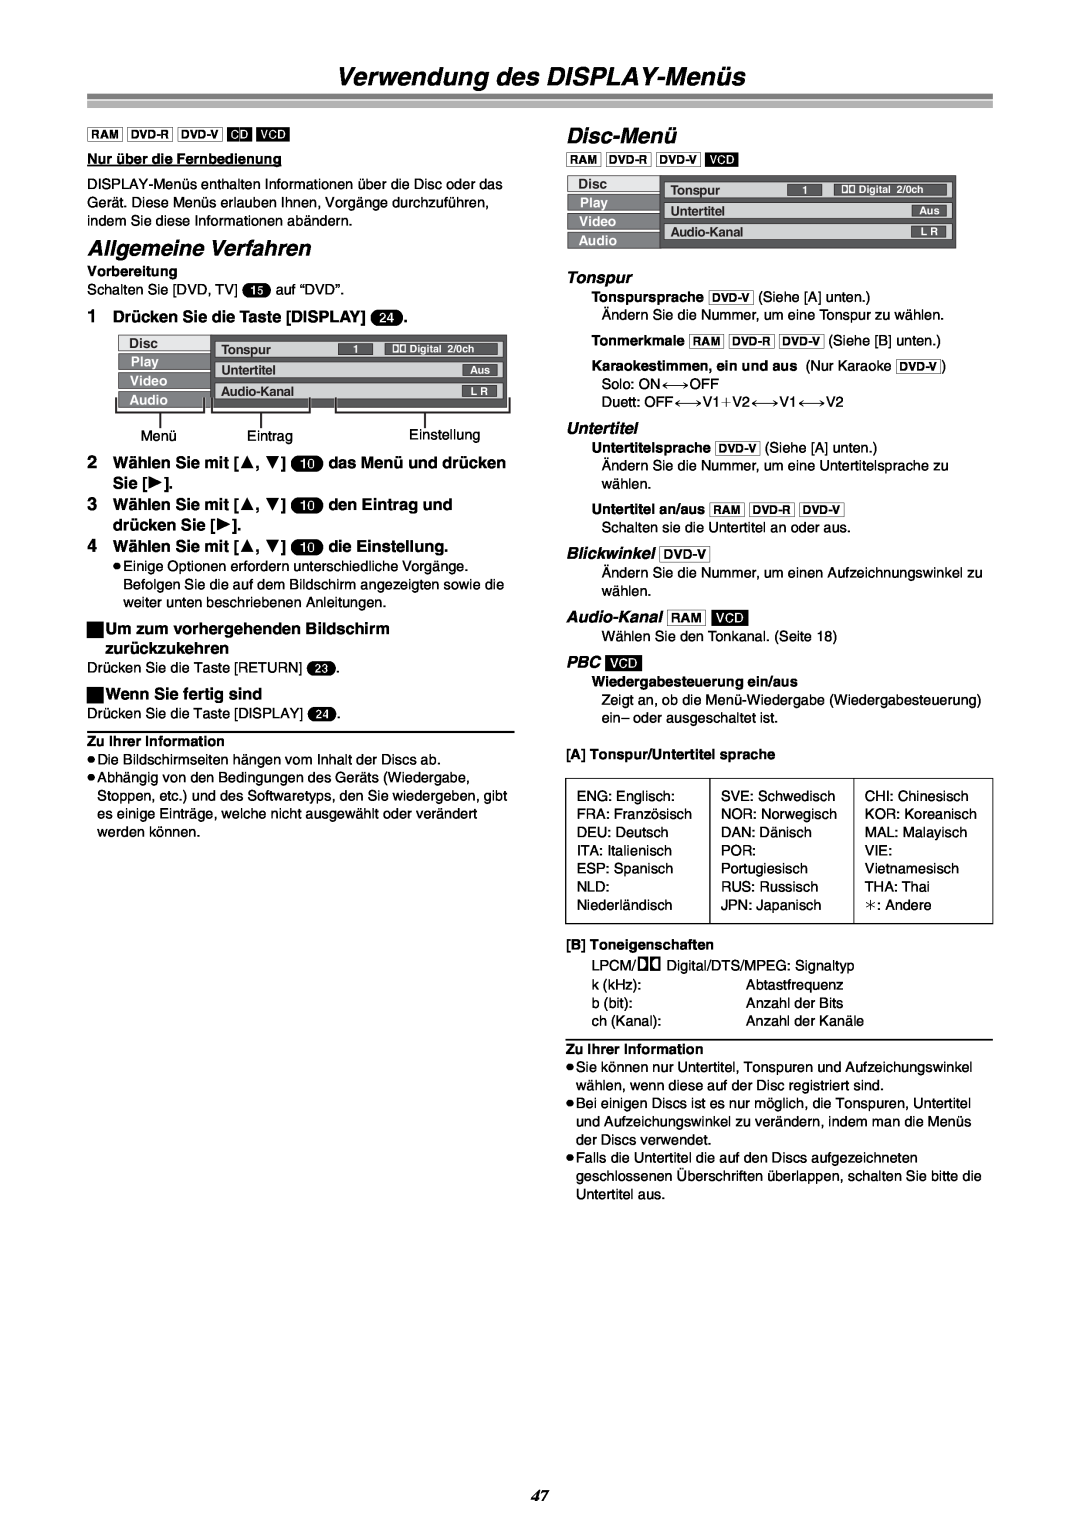 Panasonic DMR-E30 manual Verwendung des DISPLAY-Menüs, Allgemeine Verfahren, Disc-Menü 